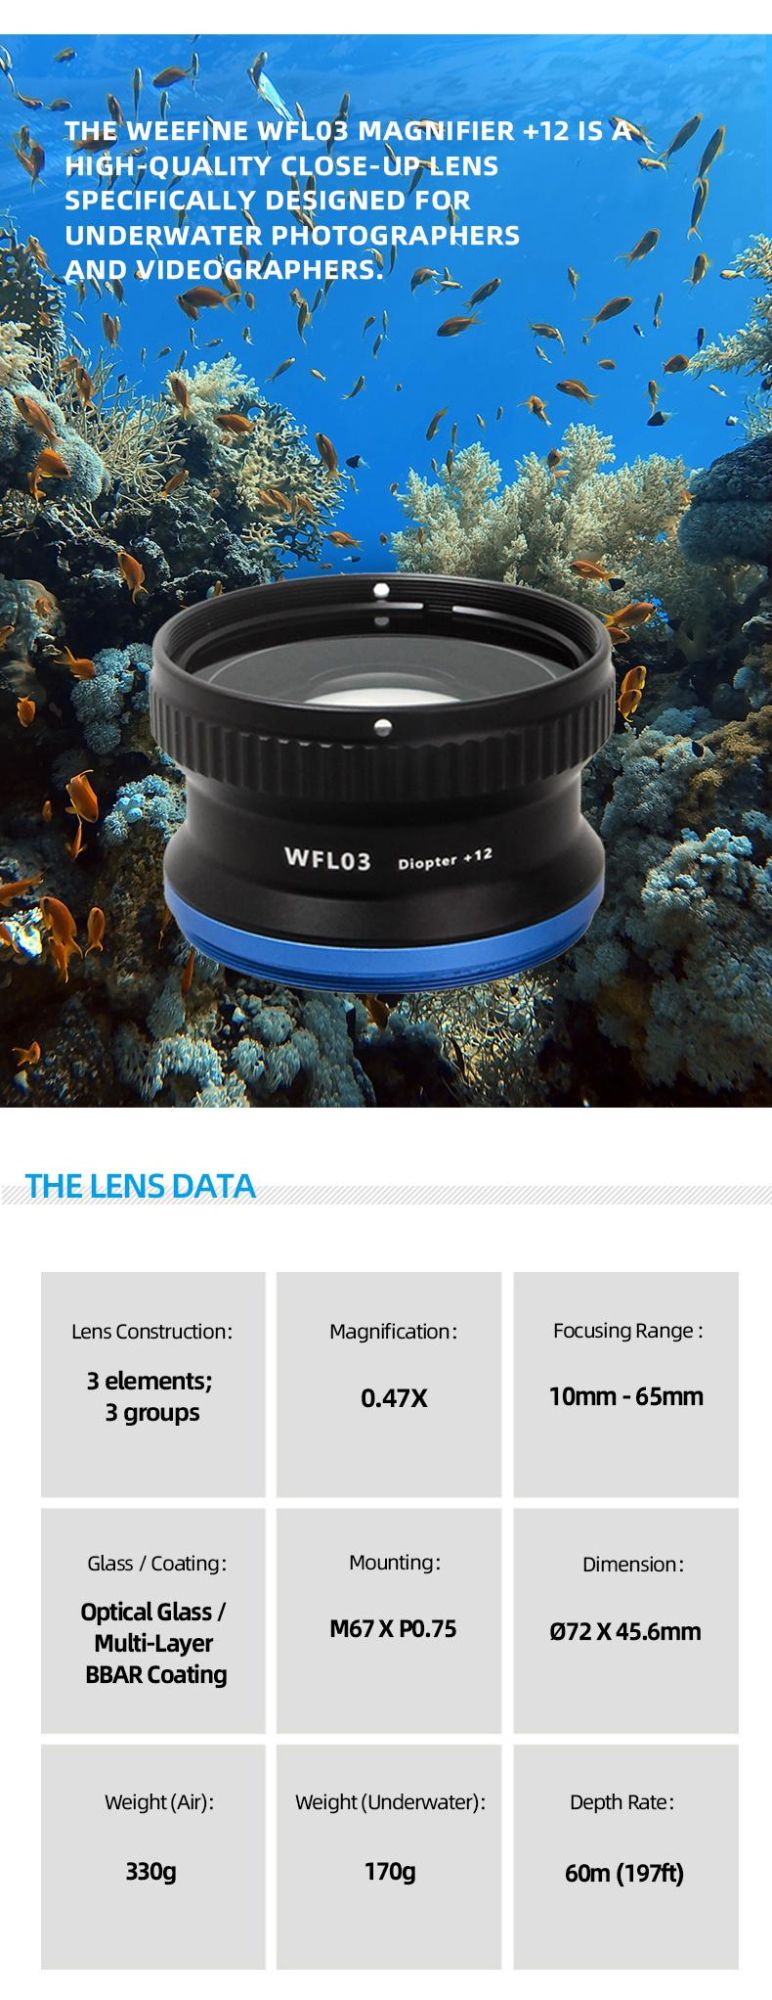 Waterproof Close-up Lens Focus on Short Distances for Creating Super Sharp Images